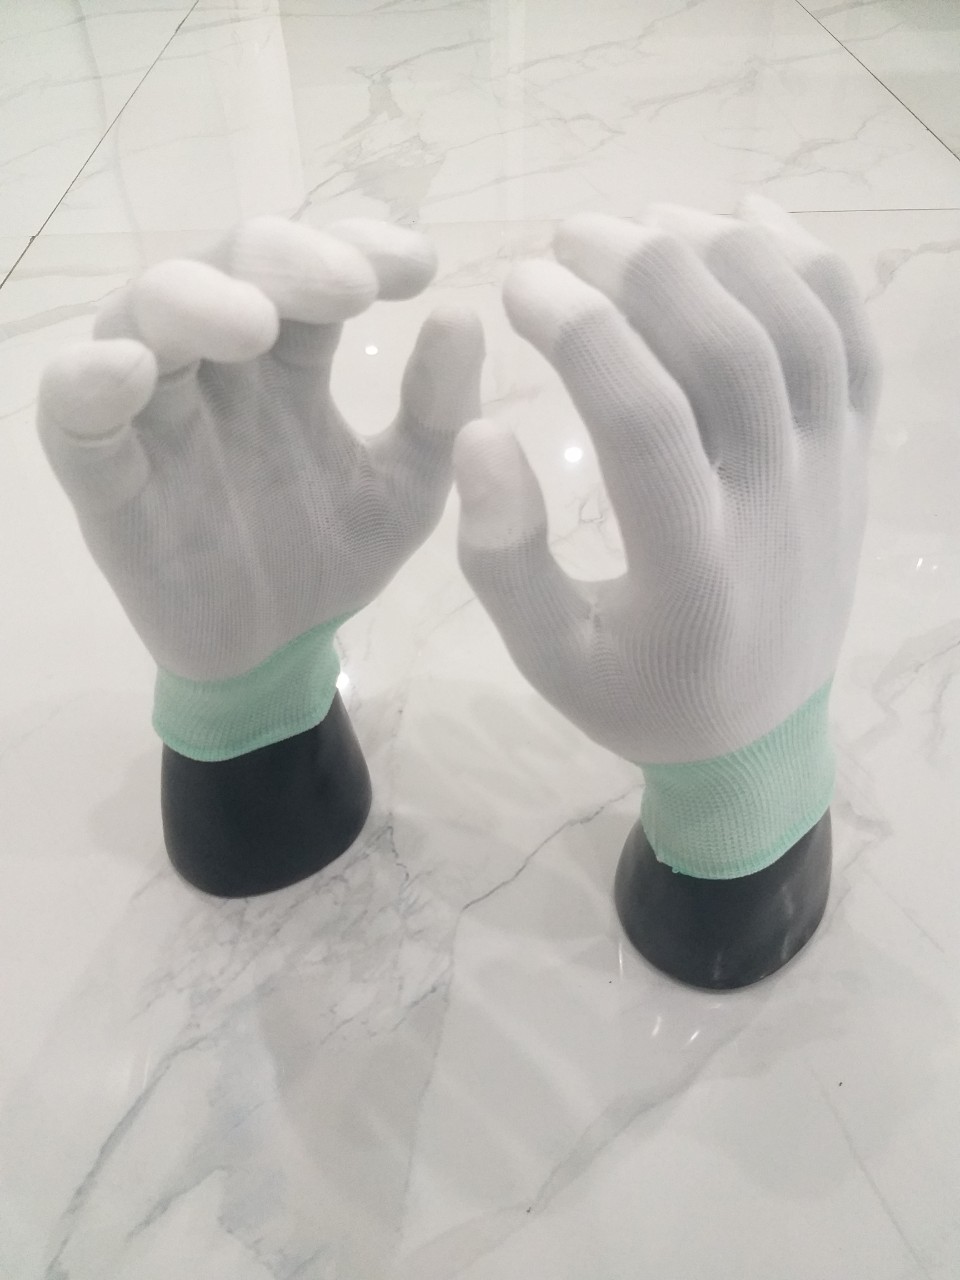 [Economy] Polyurethane Coating-Gloves (Top Fit)